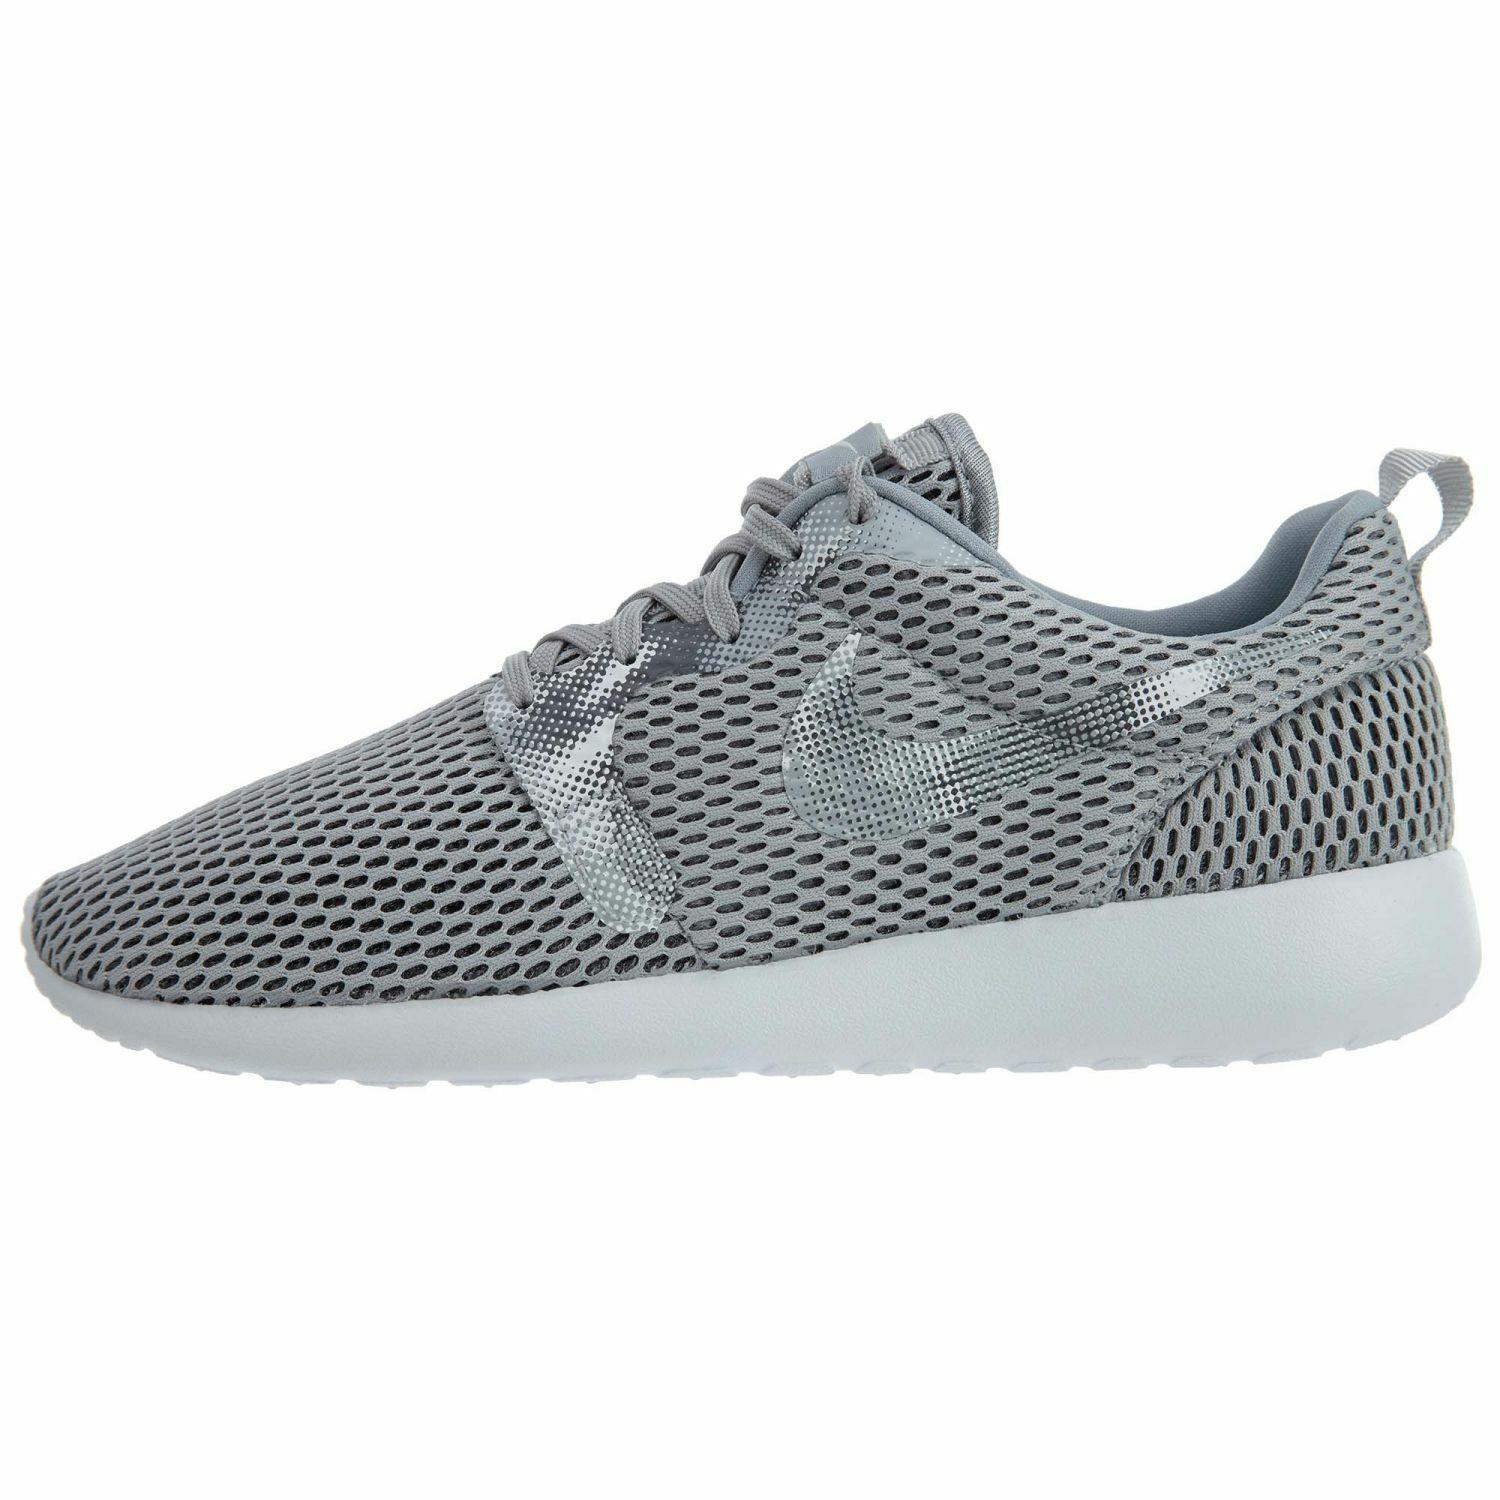 Nike Roshe One Hyperfuse BR Gpx Mens 859526-001 Grey Running Shoes Size 7.5 - Wolf Grey/Whitel/Dark Grey